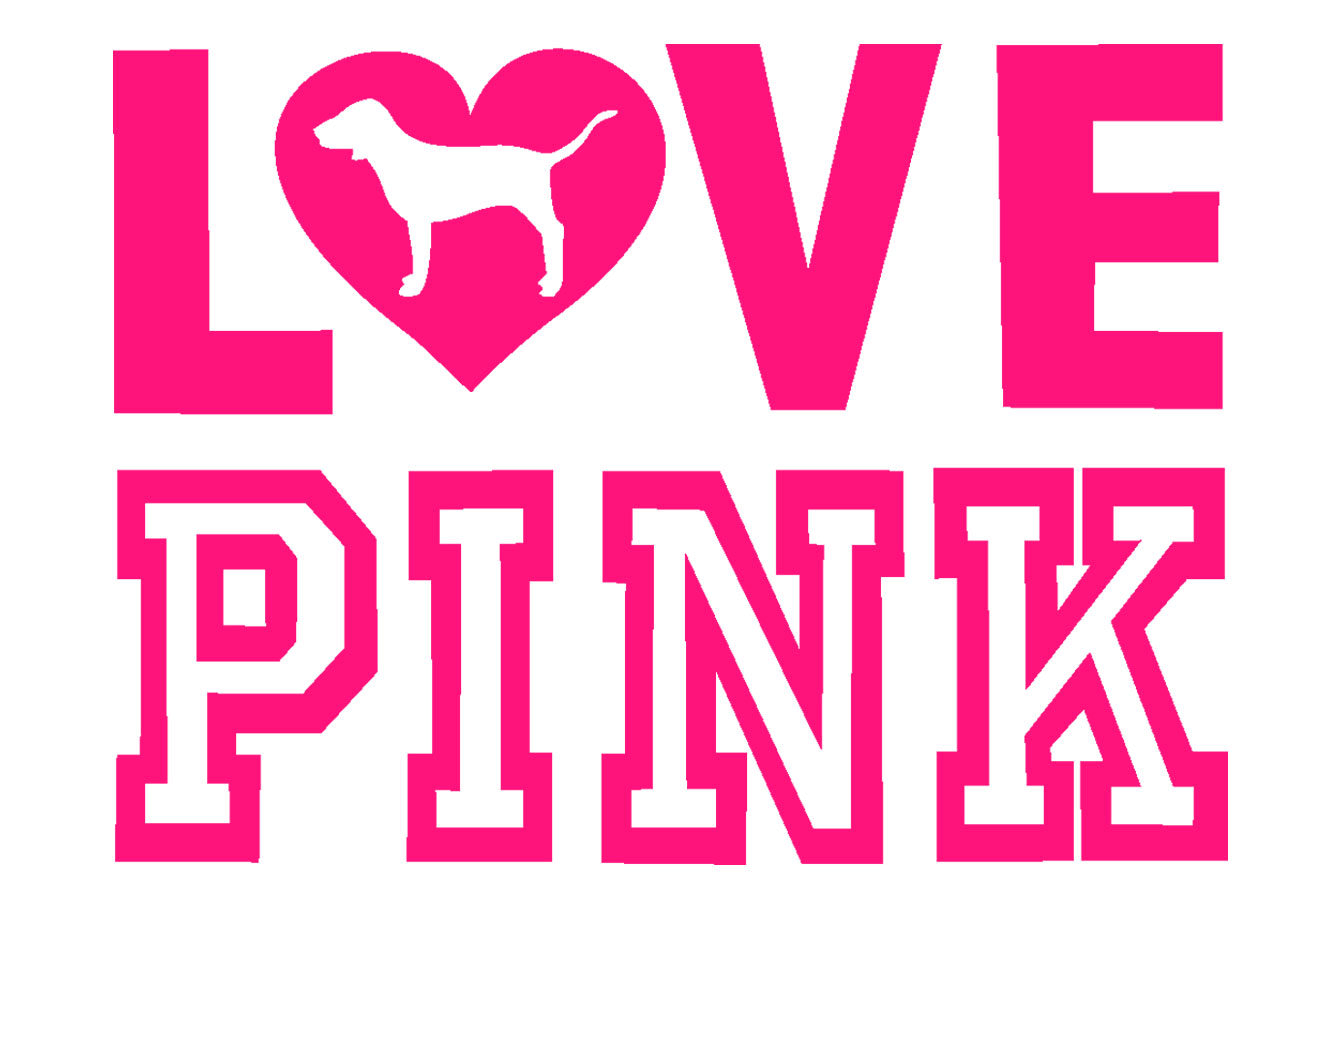 Free Free 152 Love Pink Logo Svg SVG PNG EPS DXF File